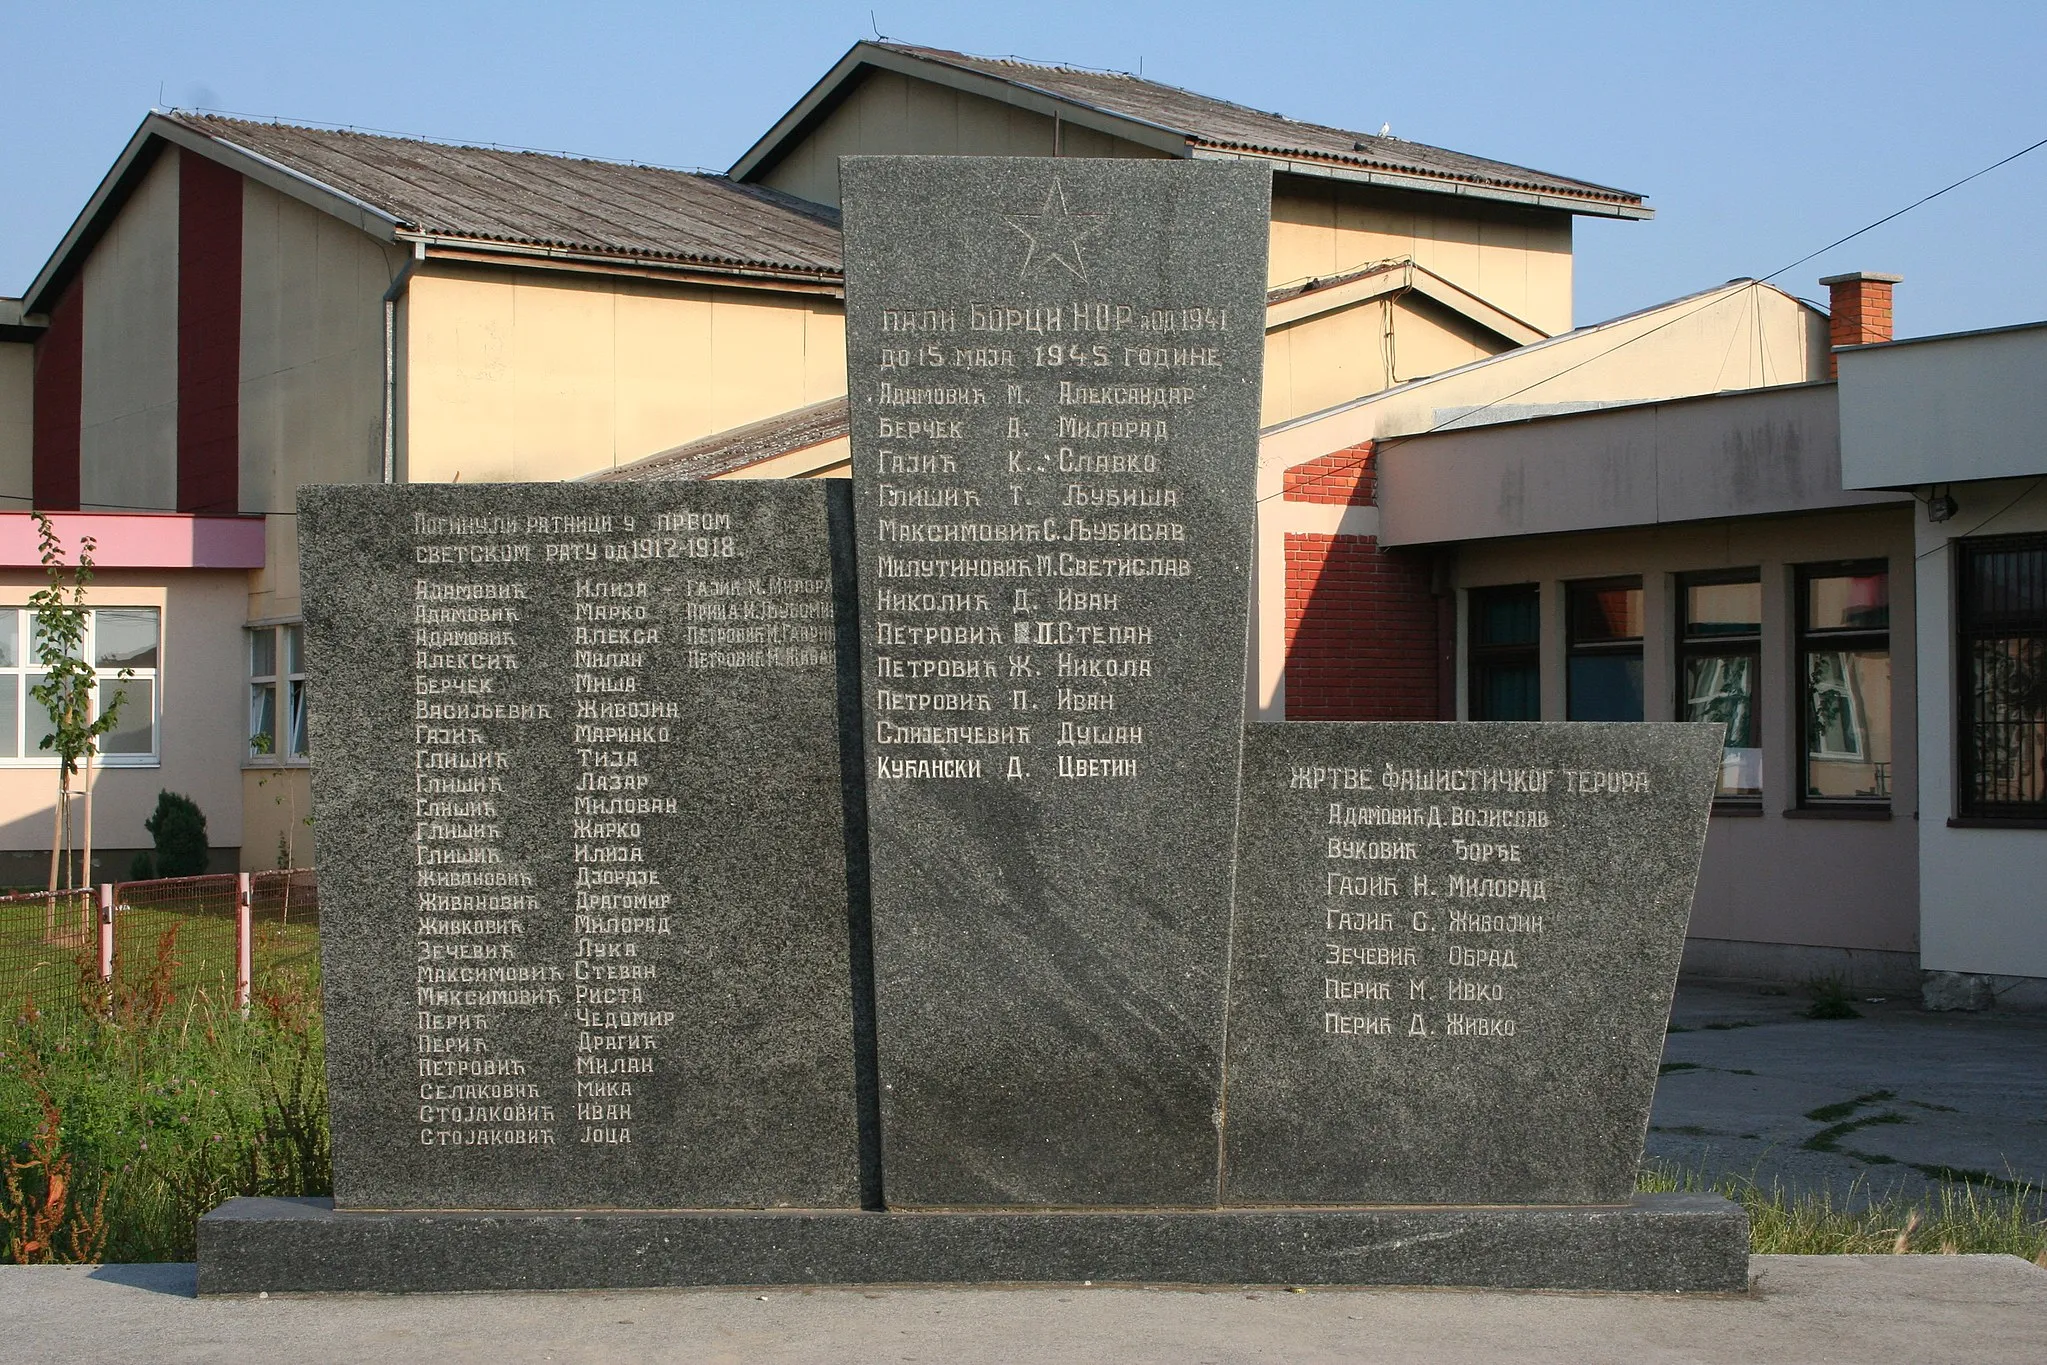 Photo showing: Spomenik u centru sela, Jevremovac